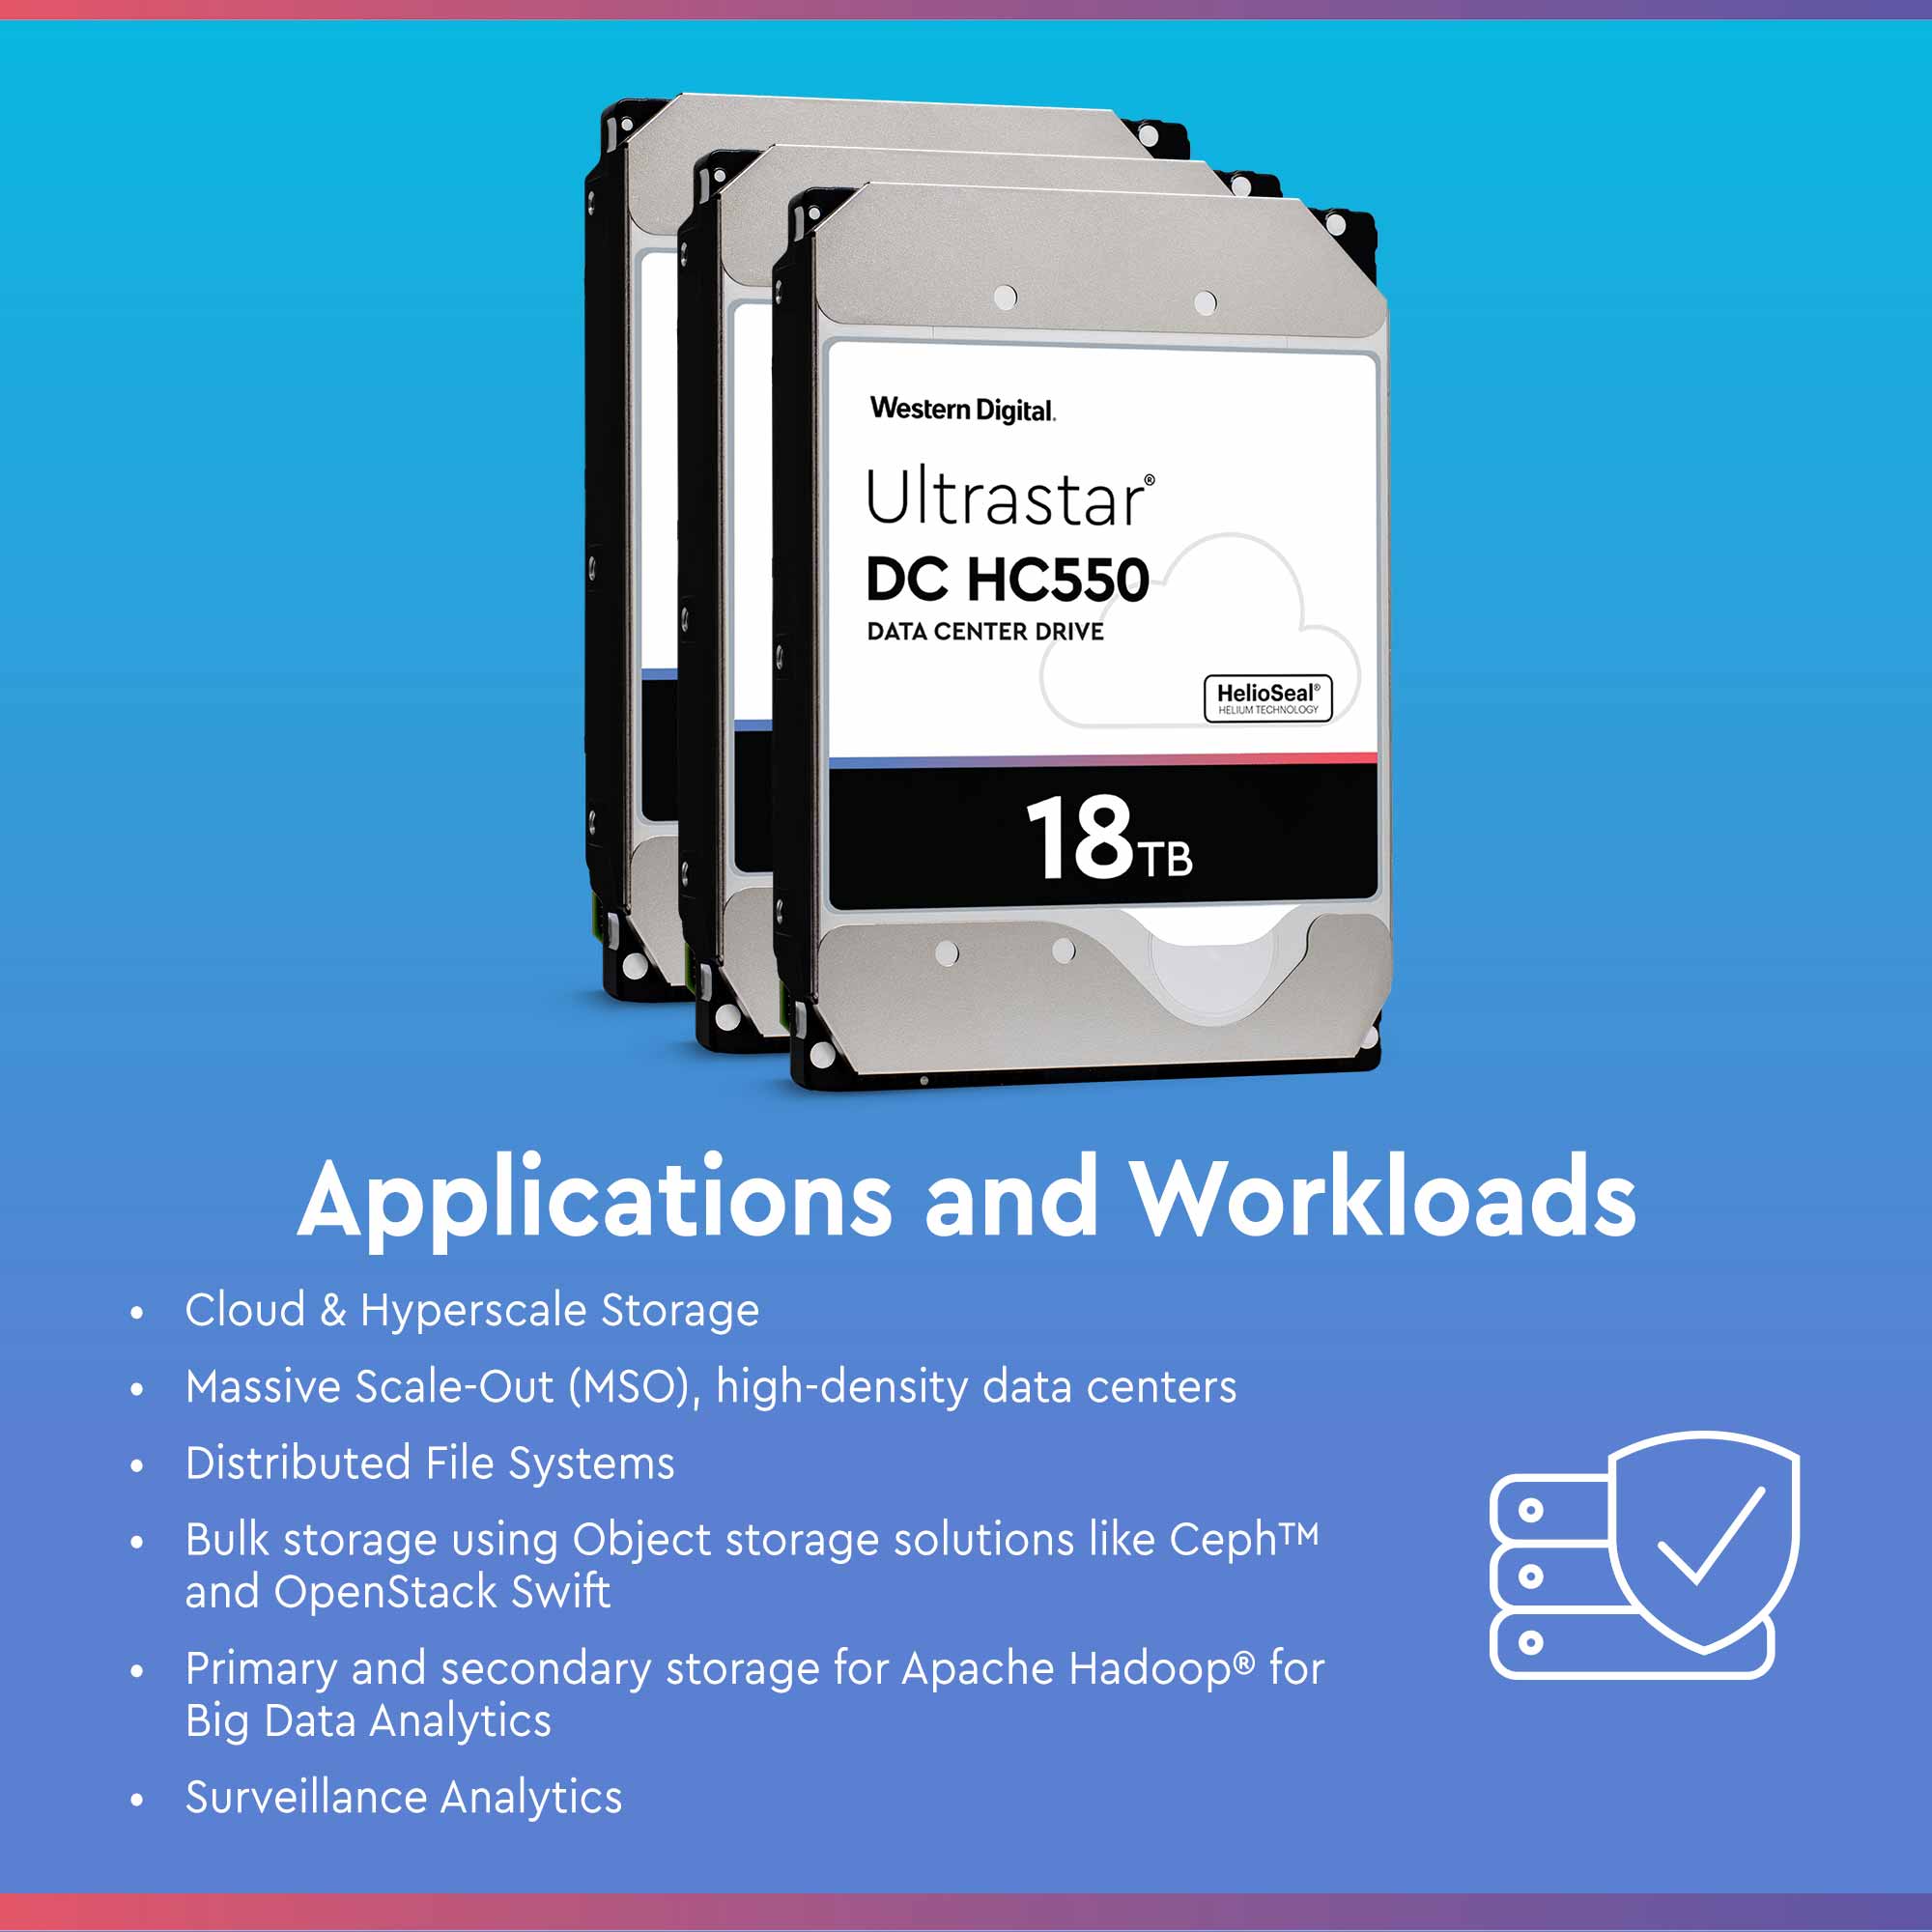 WD Ultrastar 18TB HDD DC HC550 7200RPM SATA 6Gb/s 3.5" Enterprise Hard Drive WUH721818ALE6L4 (0F38459) - Applications and Workloads